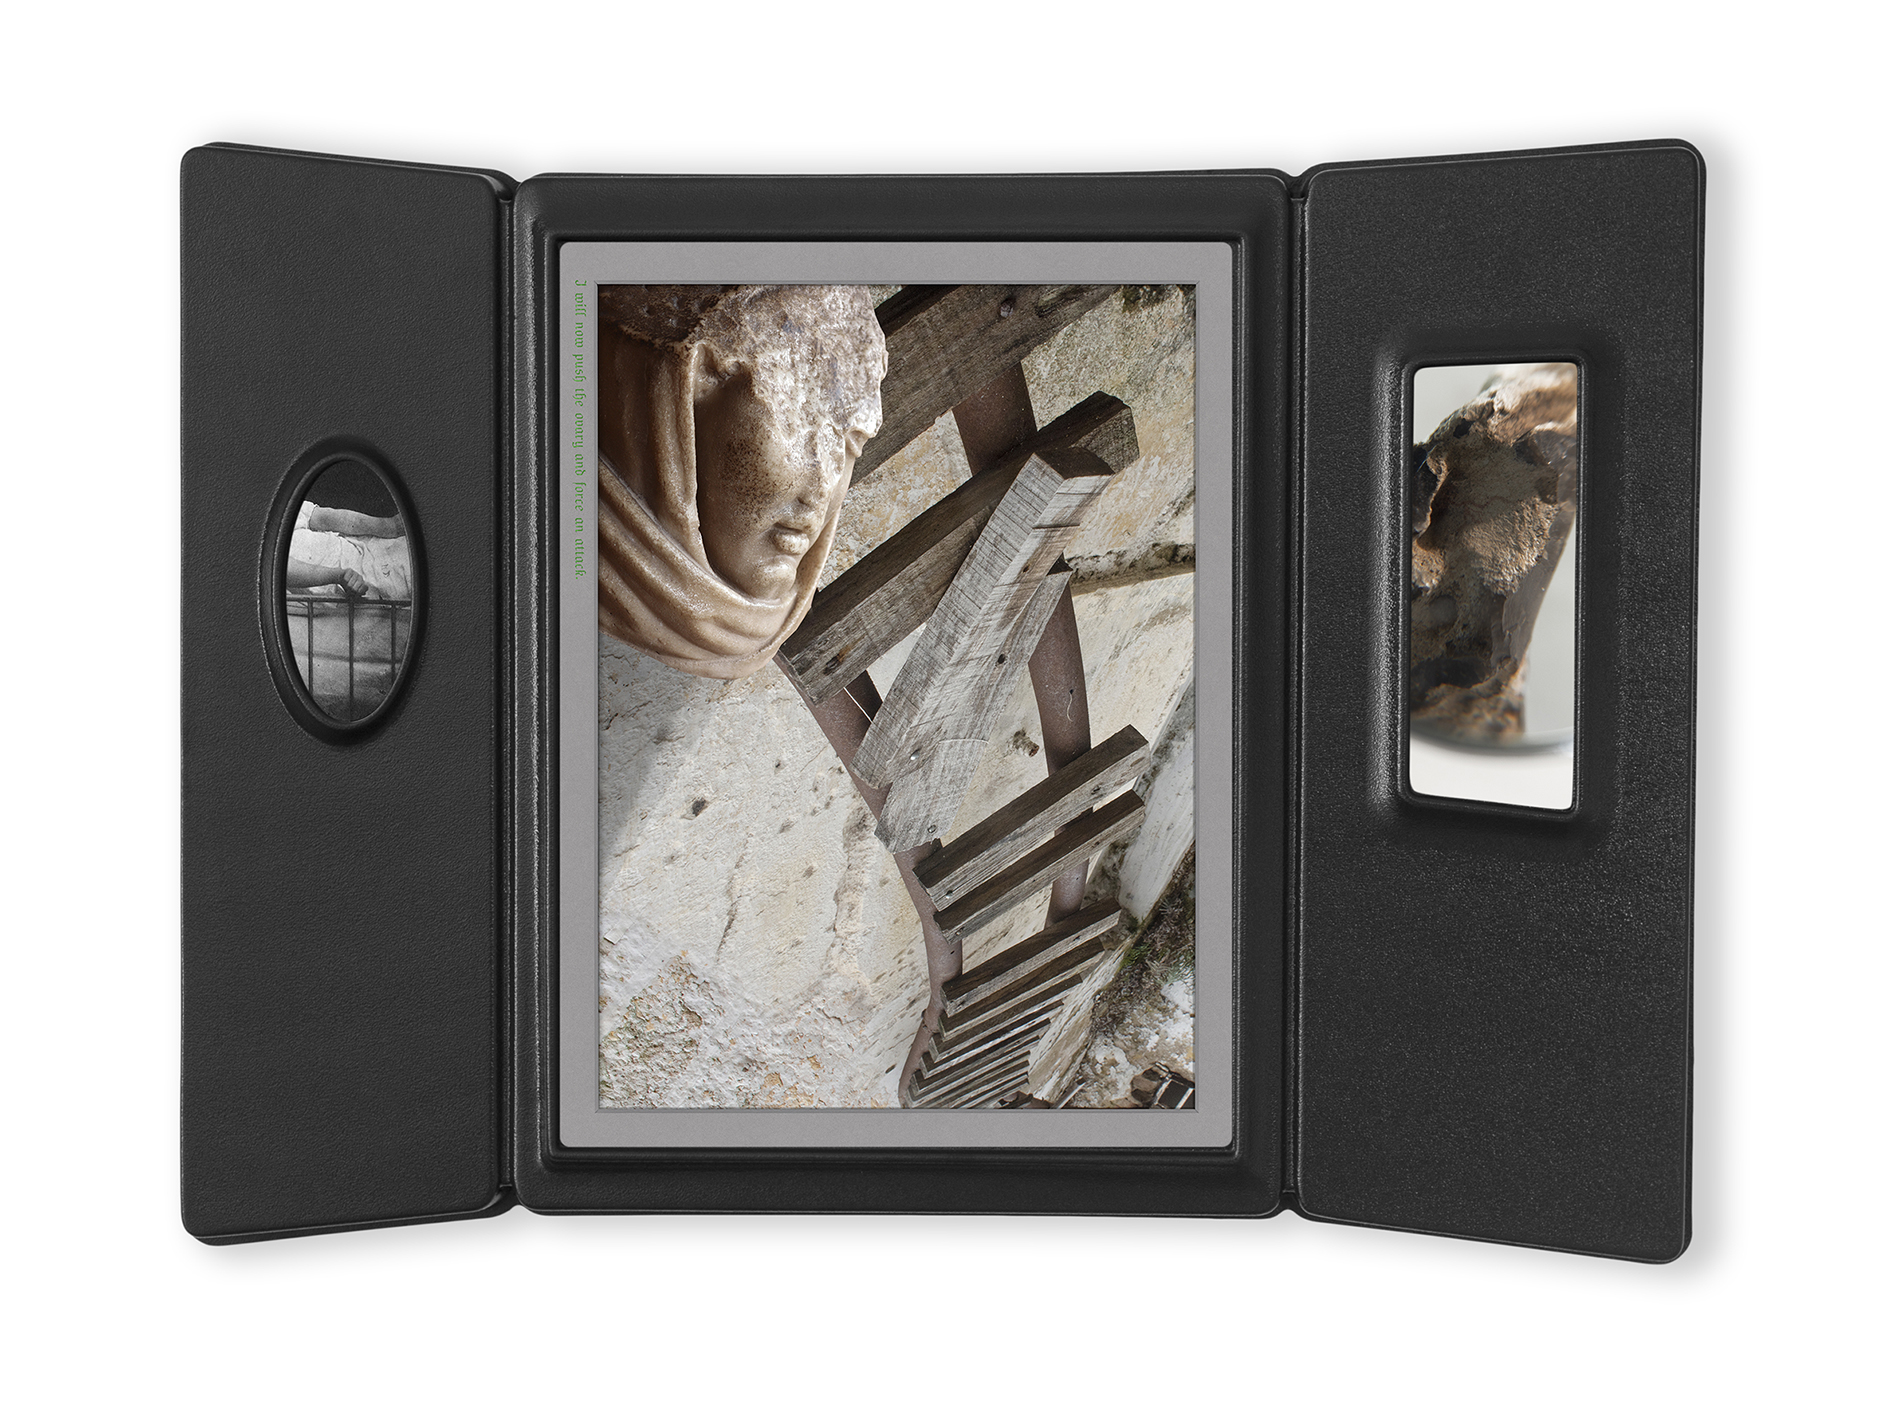 Rose (case 5101)
2020, inkjet prints, acrylic face mount, vacuum formed frame, 51.5x70x5 cm